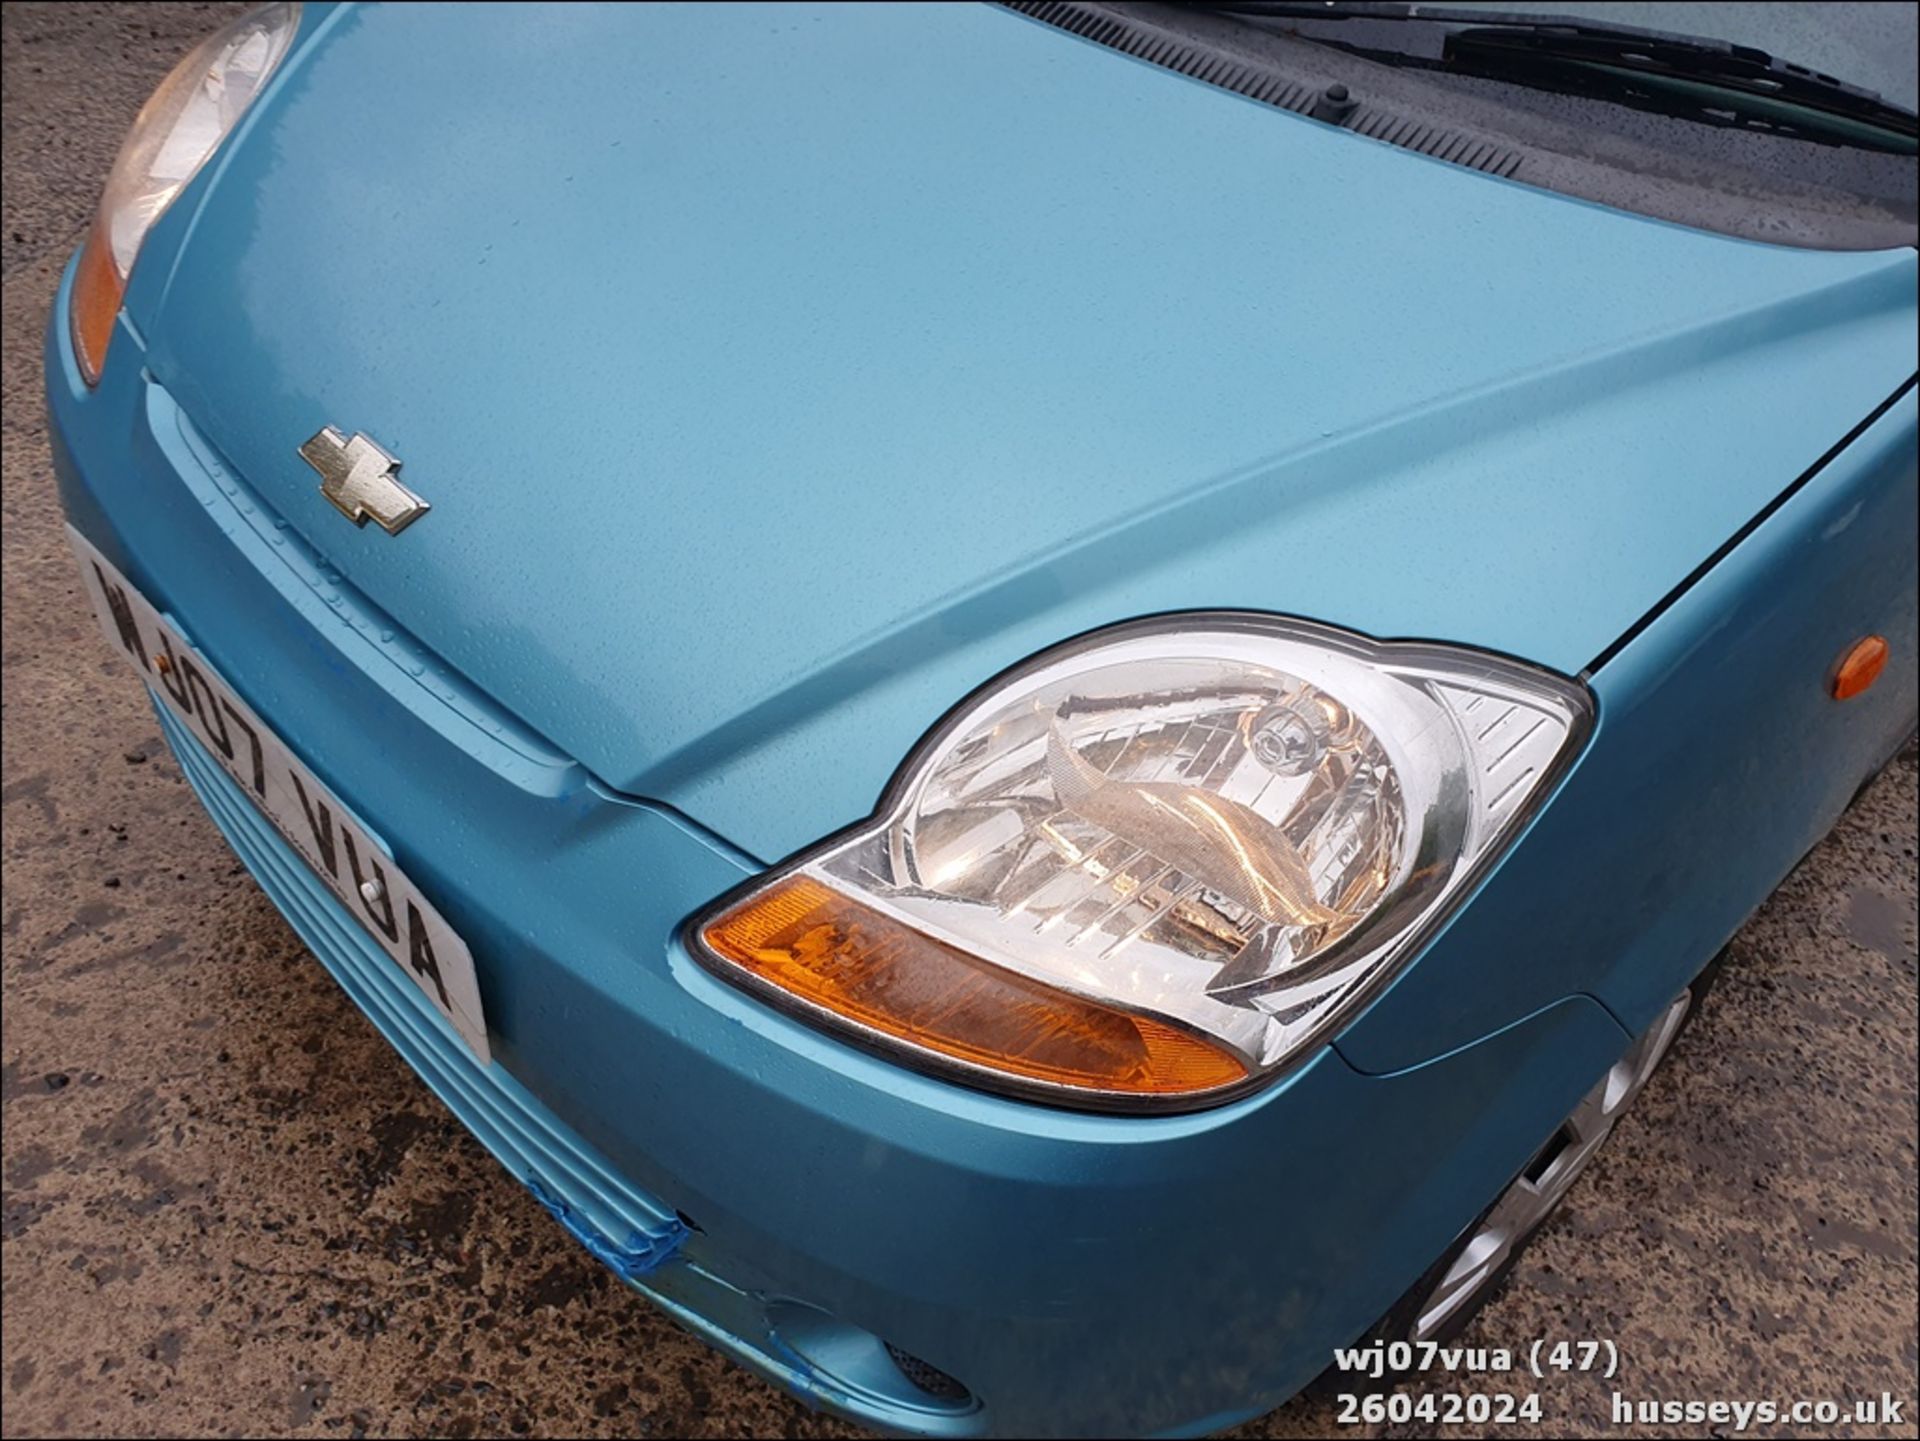 07/07 CHEVROLET MATIZ SE AUTO - 796cc 5dr Hatchback (Blue, 36k) - Image 48 of 56